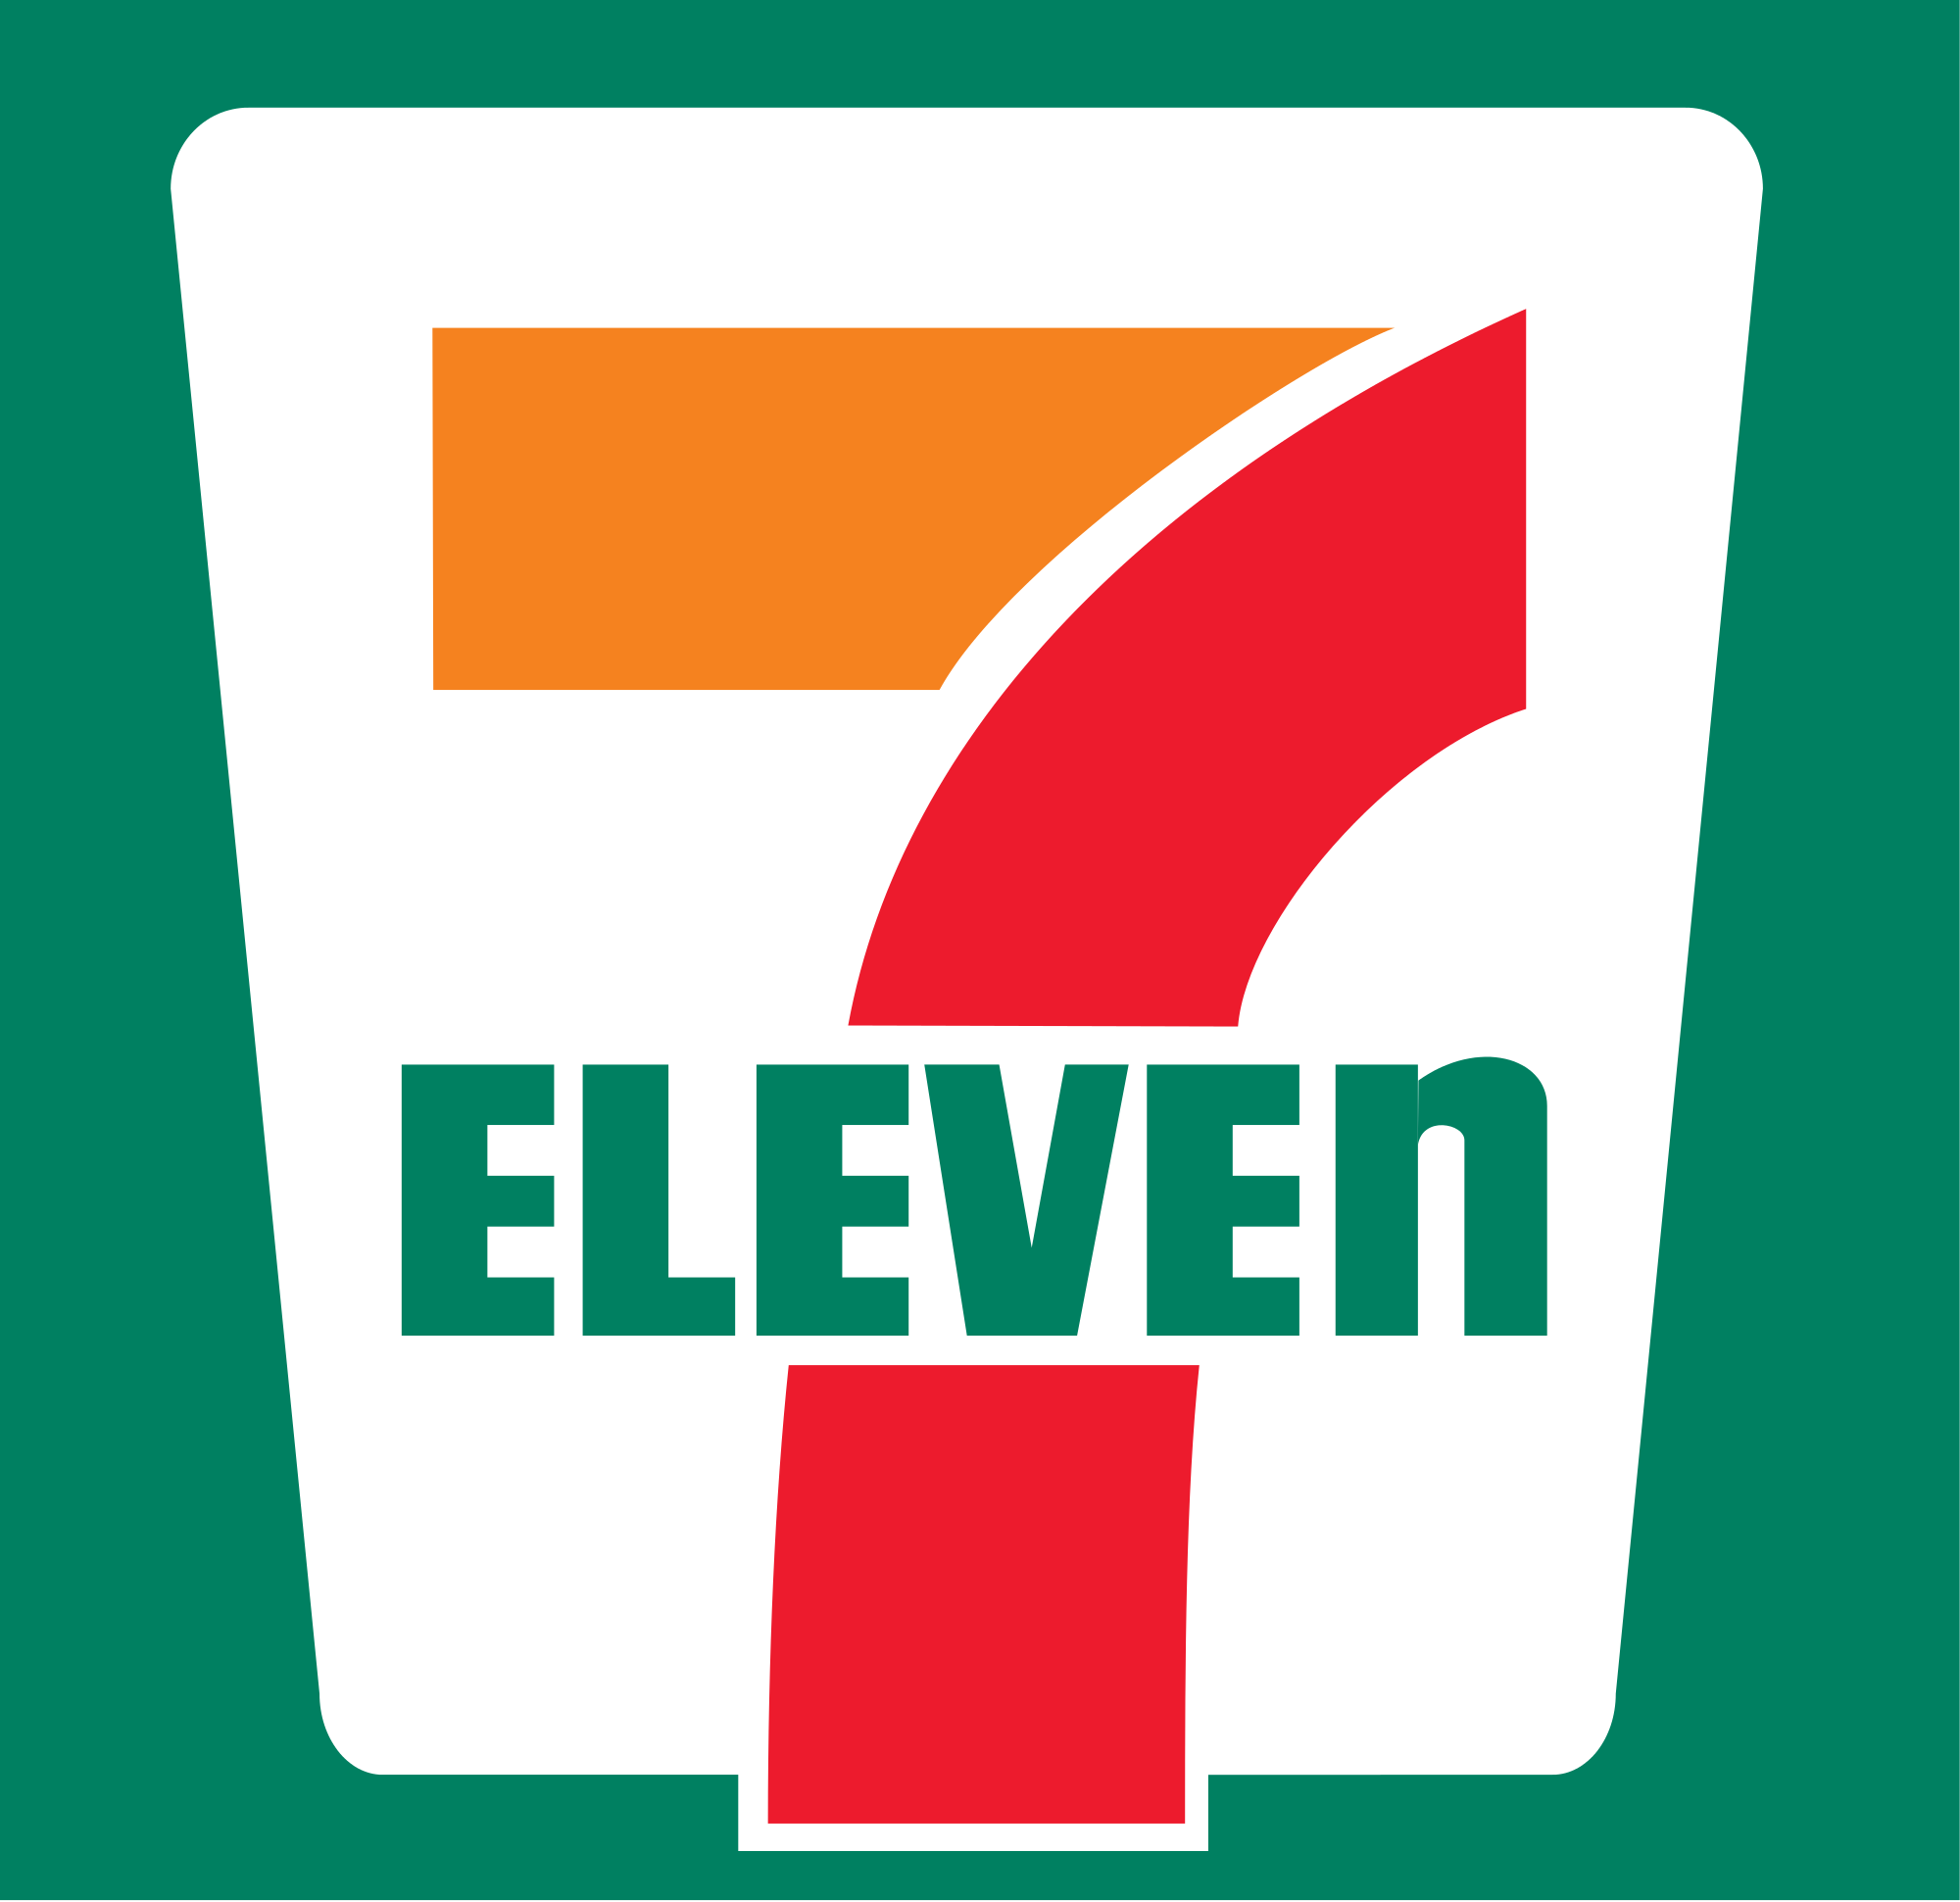 7-Eleven Brand Logo